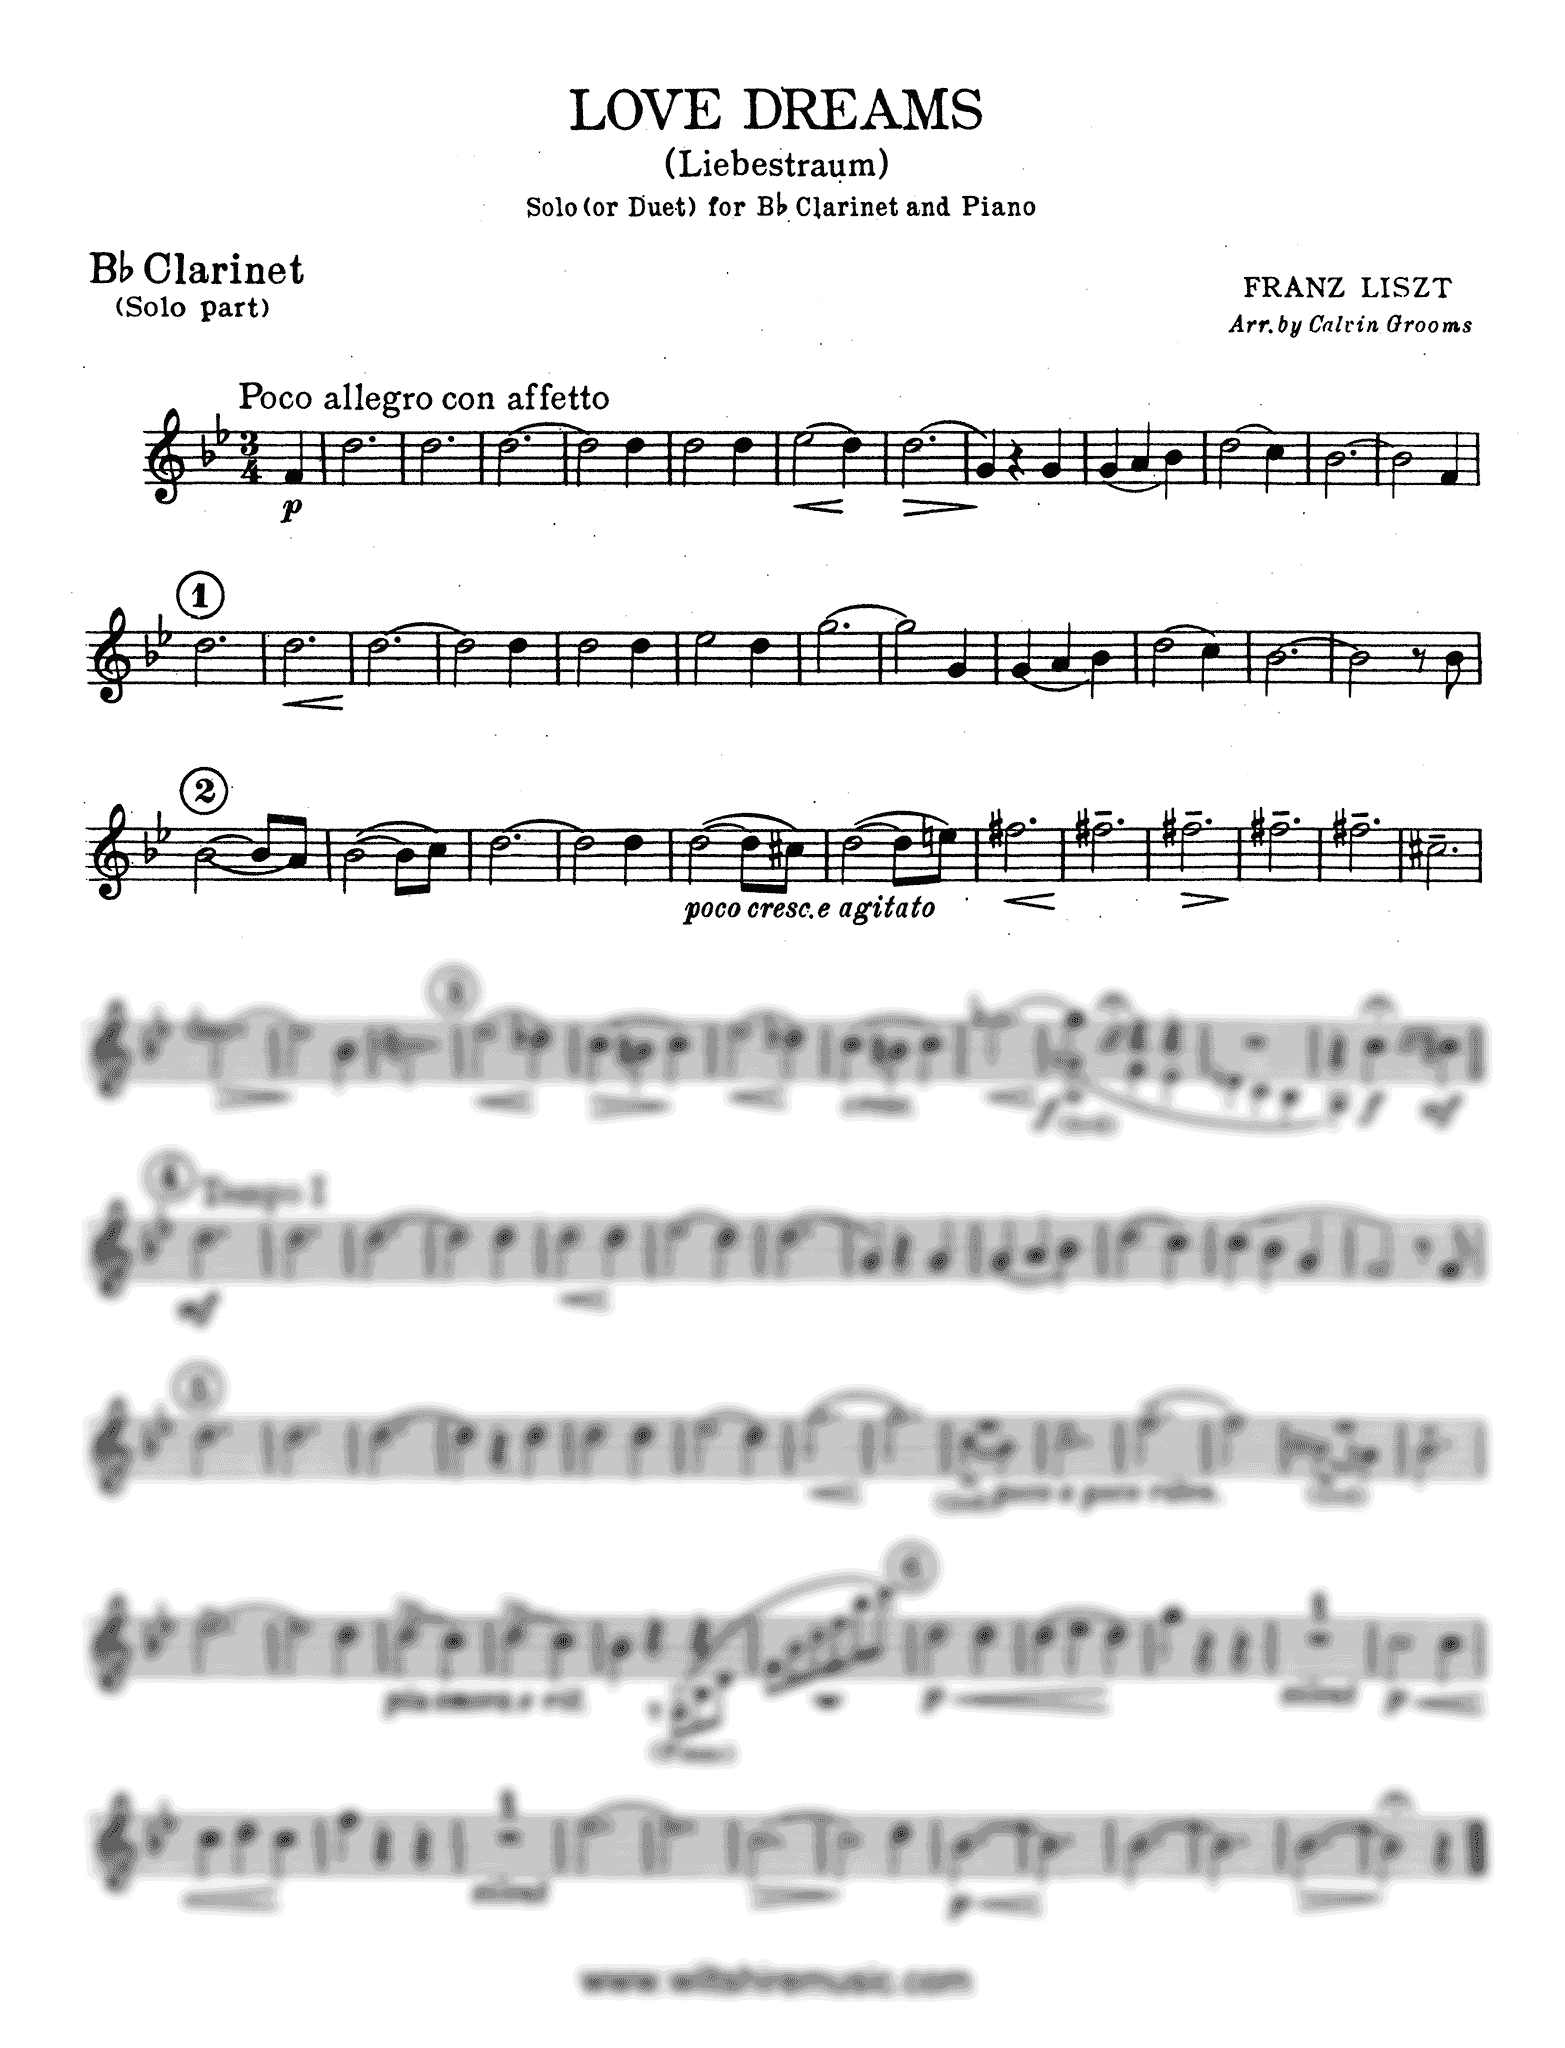 Liszt Liebesträume No. 3 Love dreams clarinet duet with piano first part